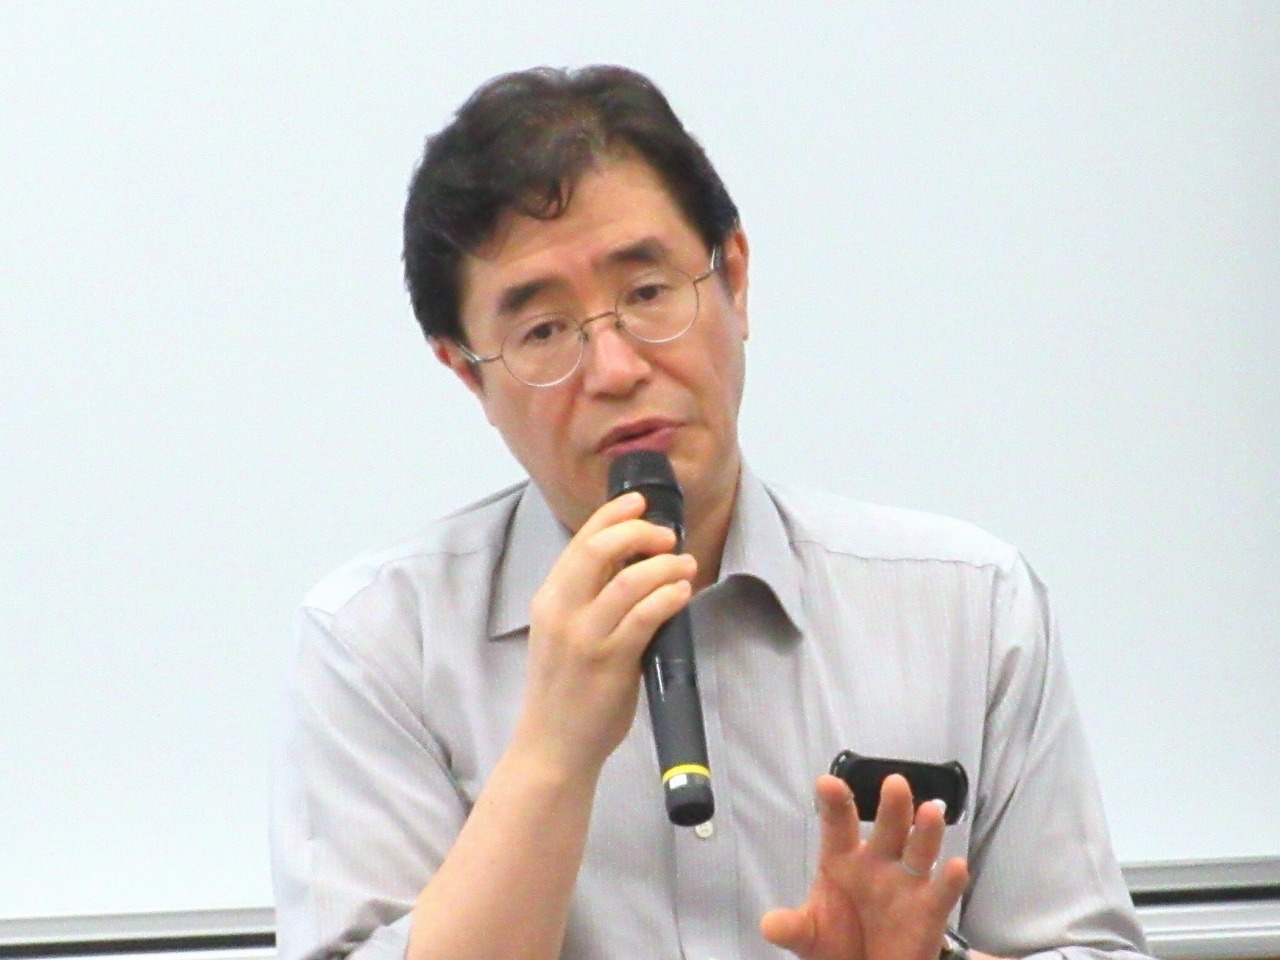 http://www.shinshu-u.ac.jp/faculty/econlaw/topics/images/s-IMG_0891.jpg